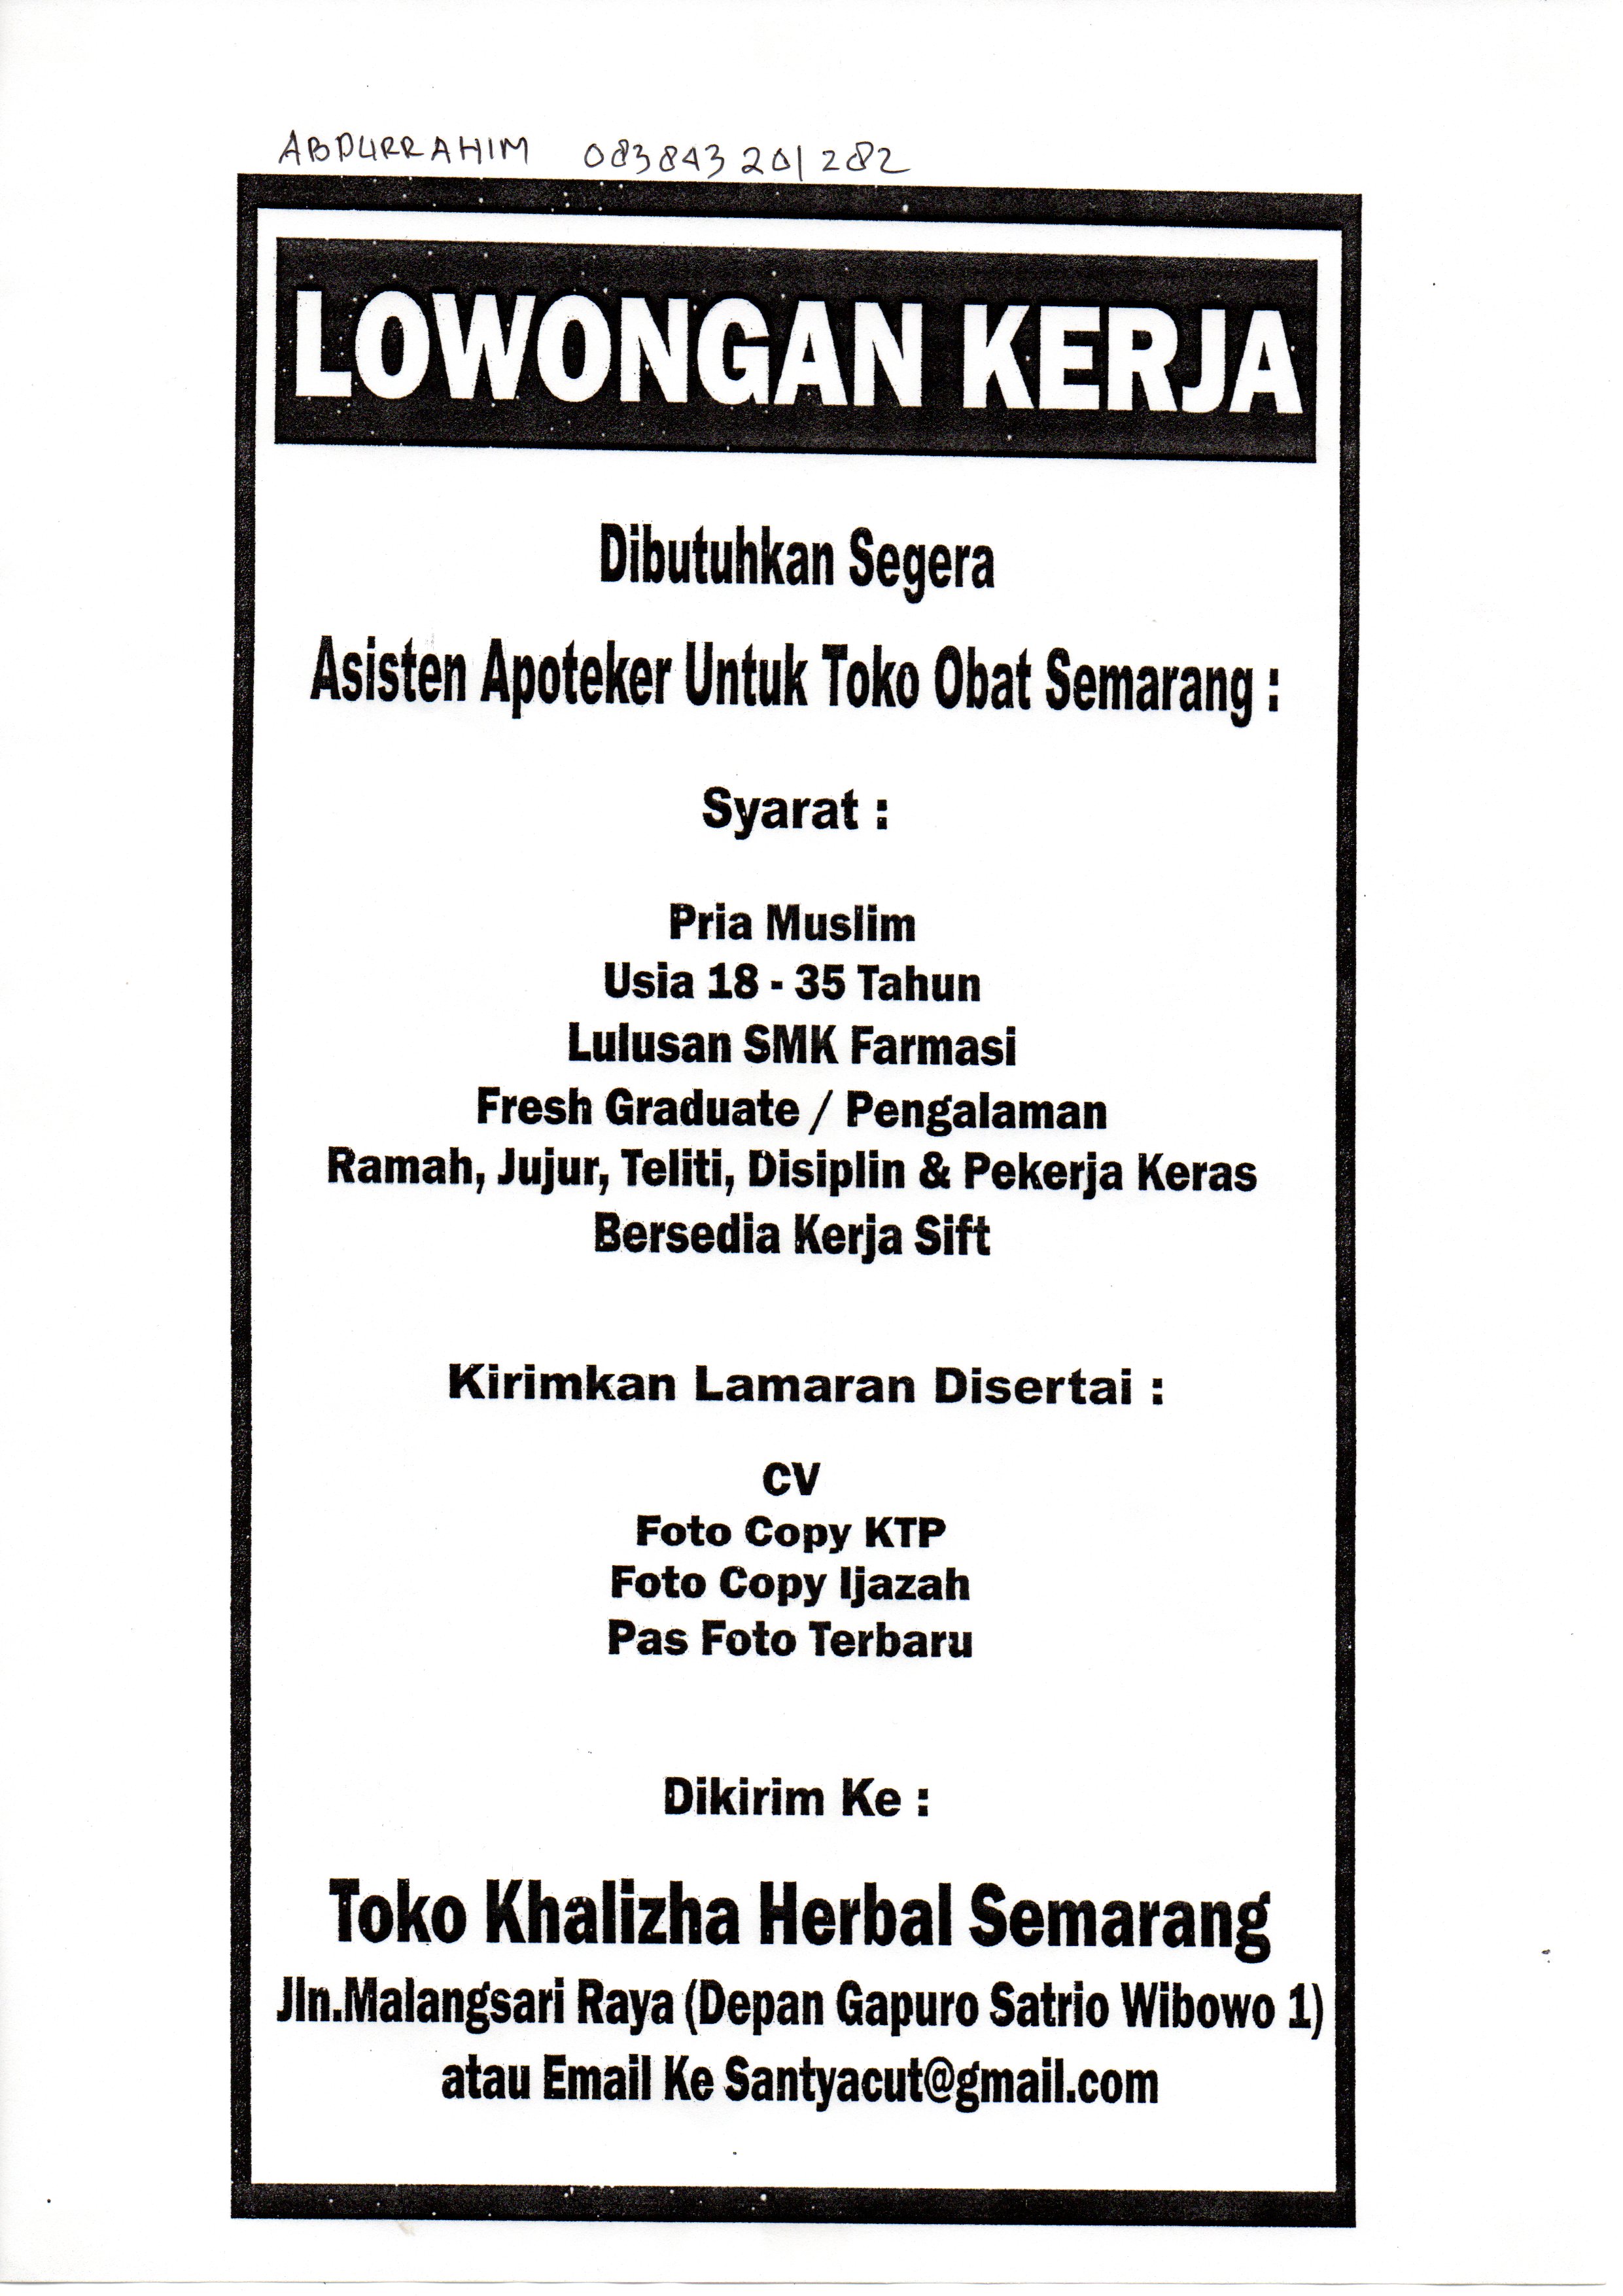 Lowongan Asisten Apoteker - SMK Yayasan Pharmasi Semarang